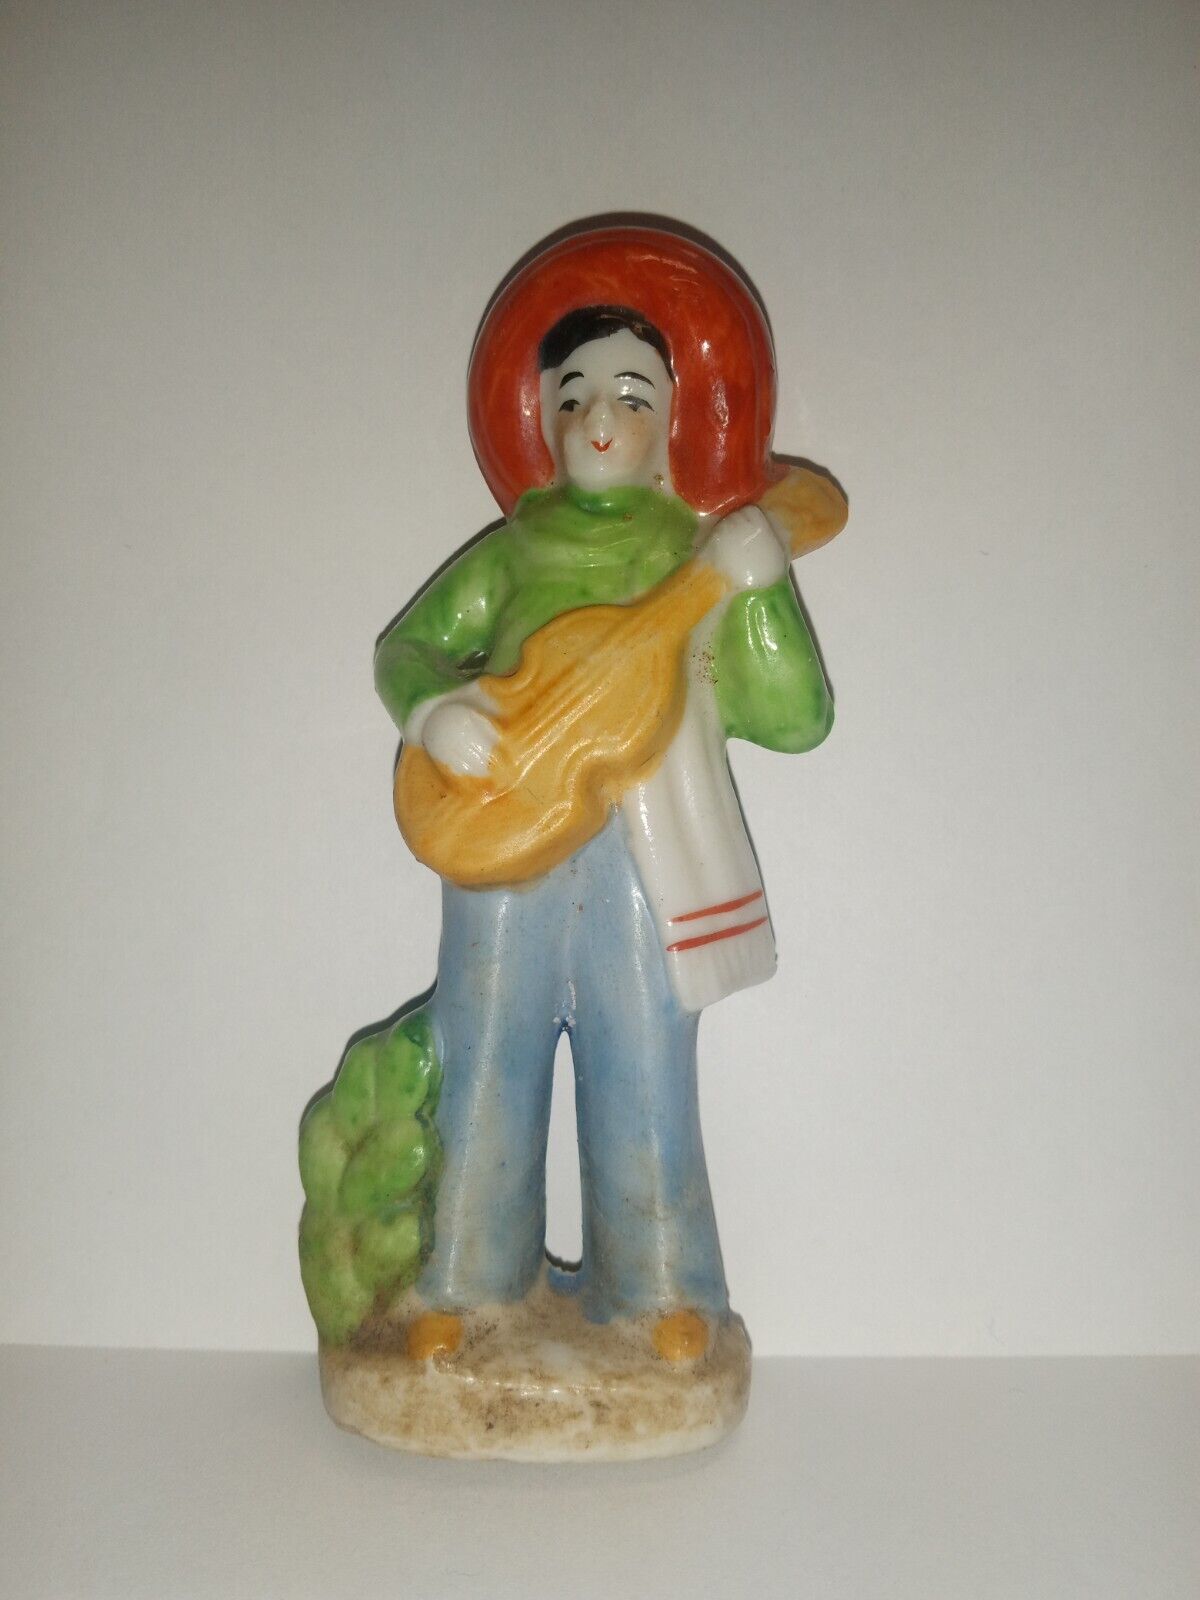 Vintage Porcelain Figurine Mexican Boy Playing Guitar Wearing Sombrero & Serape